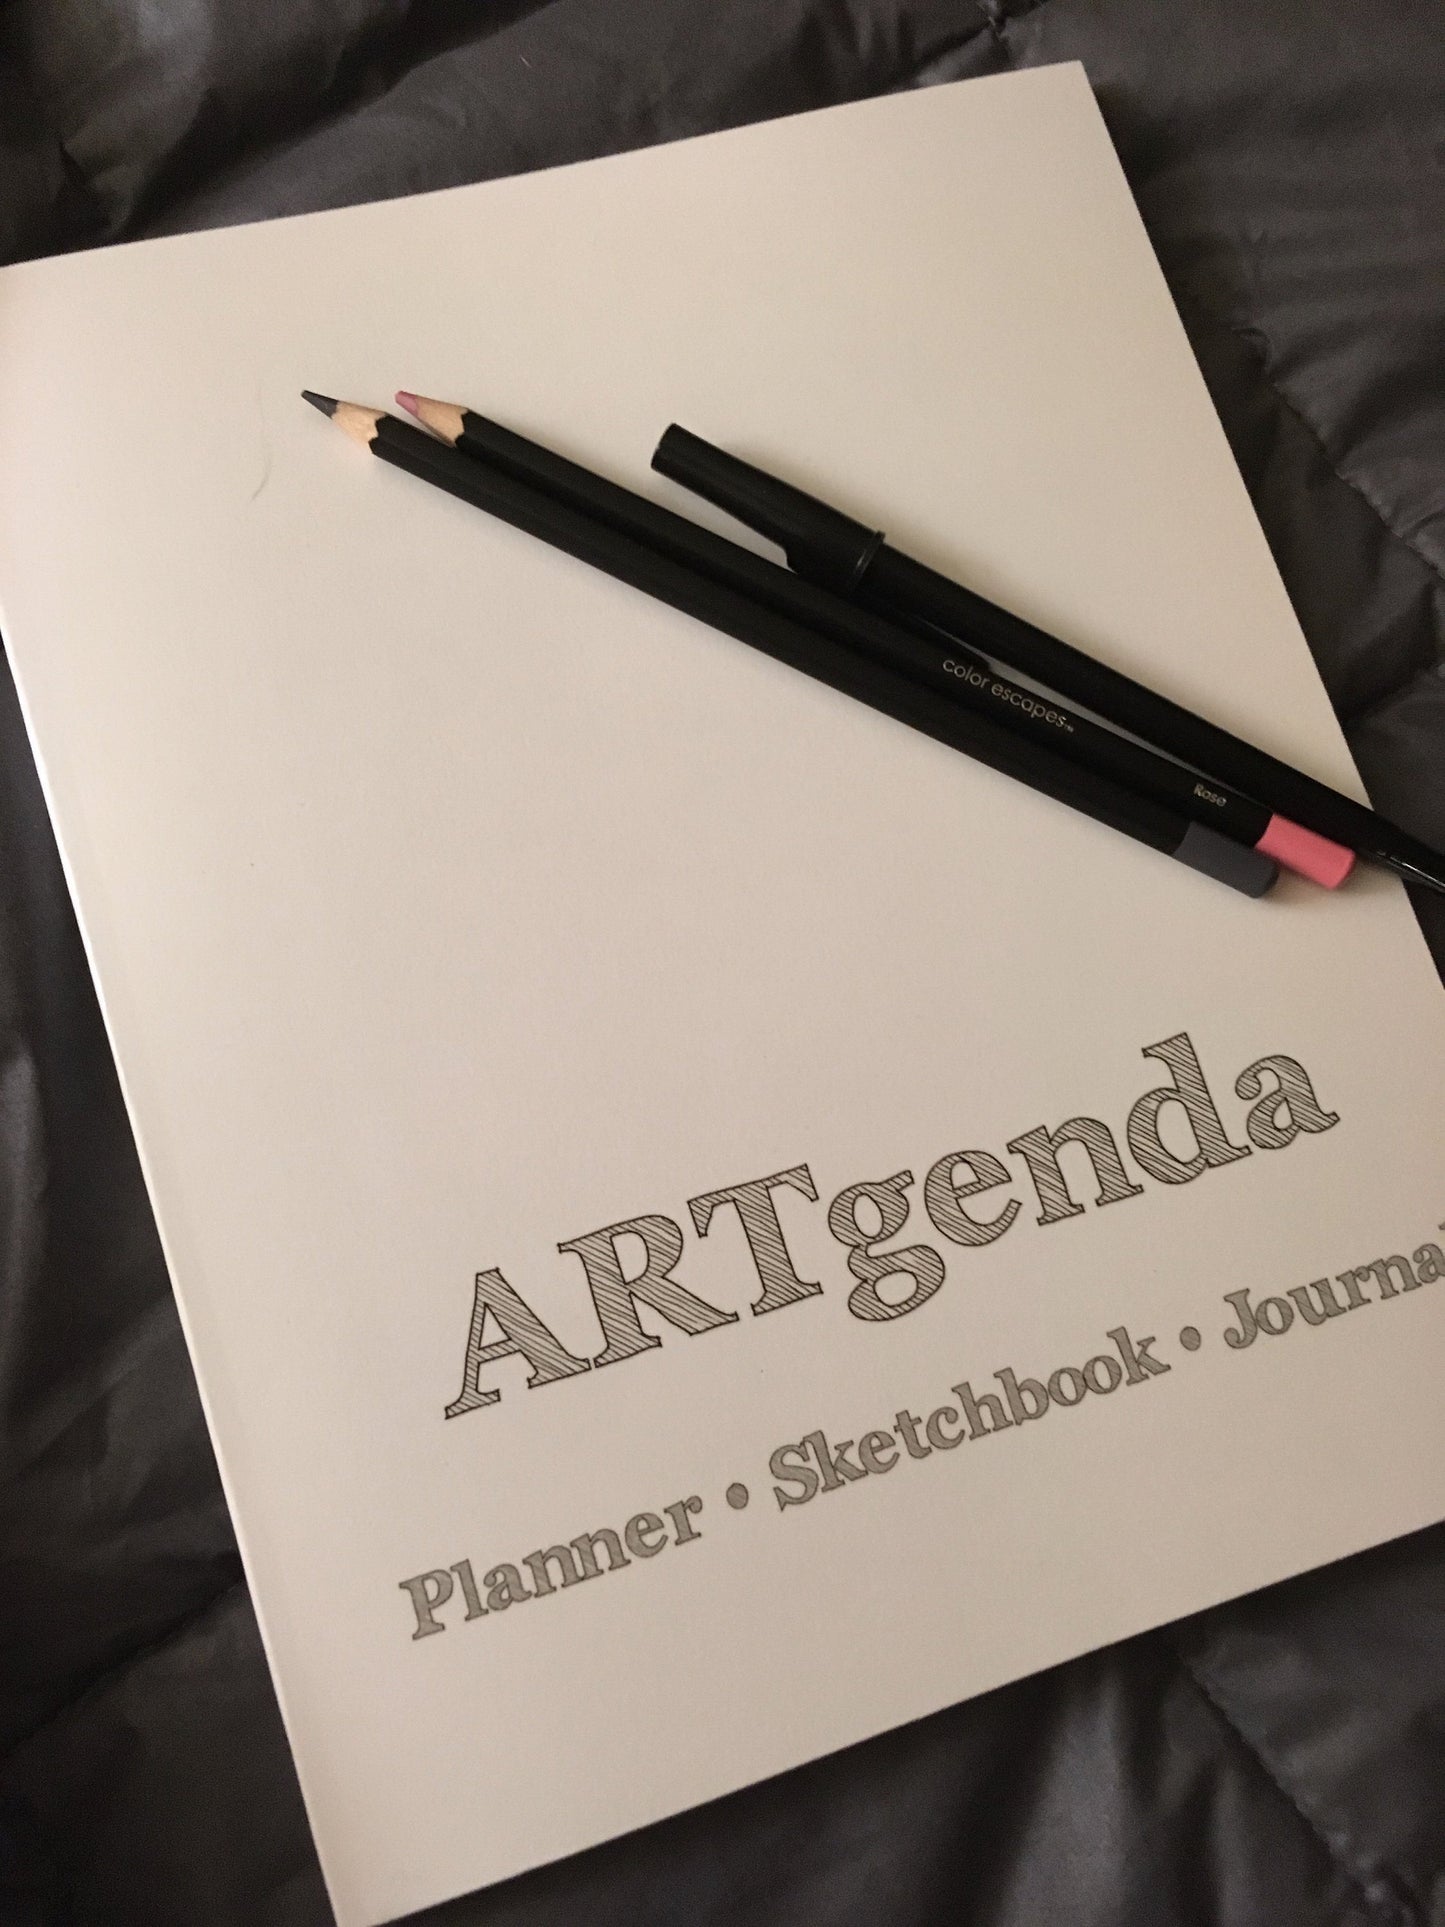 ARTgenda - Planner-Sketchbook-Journal